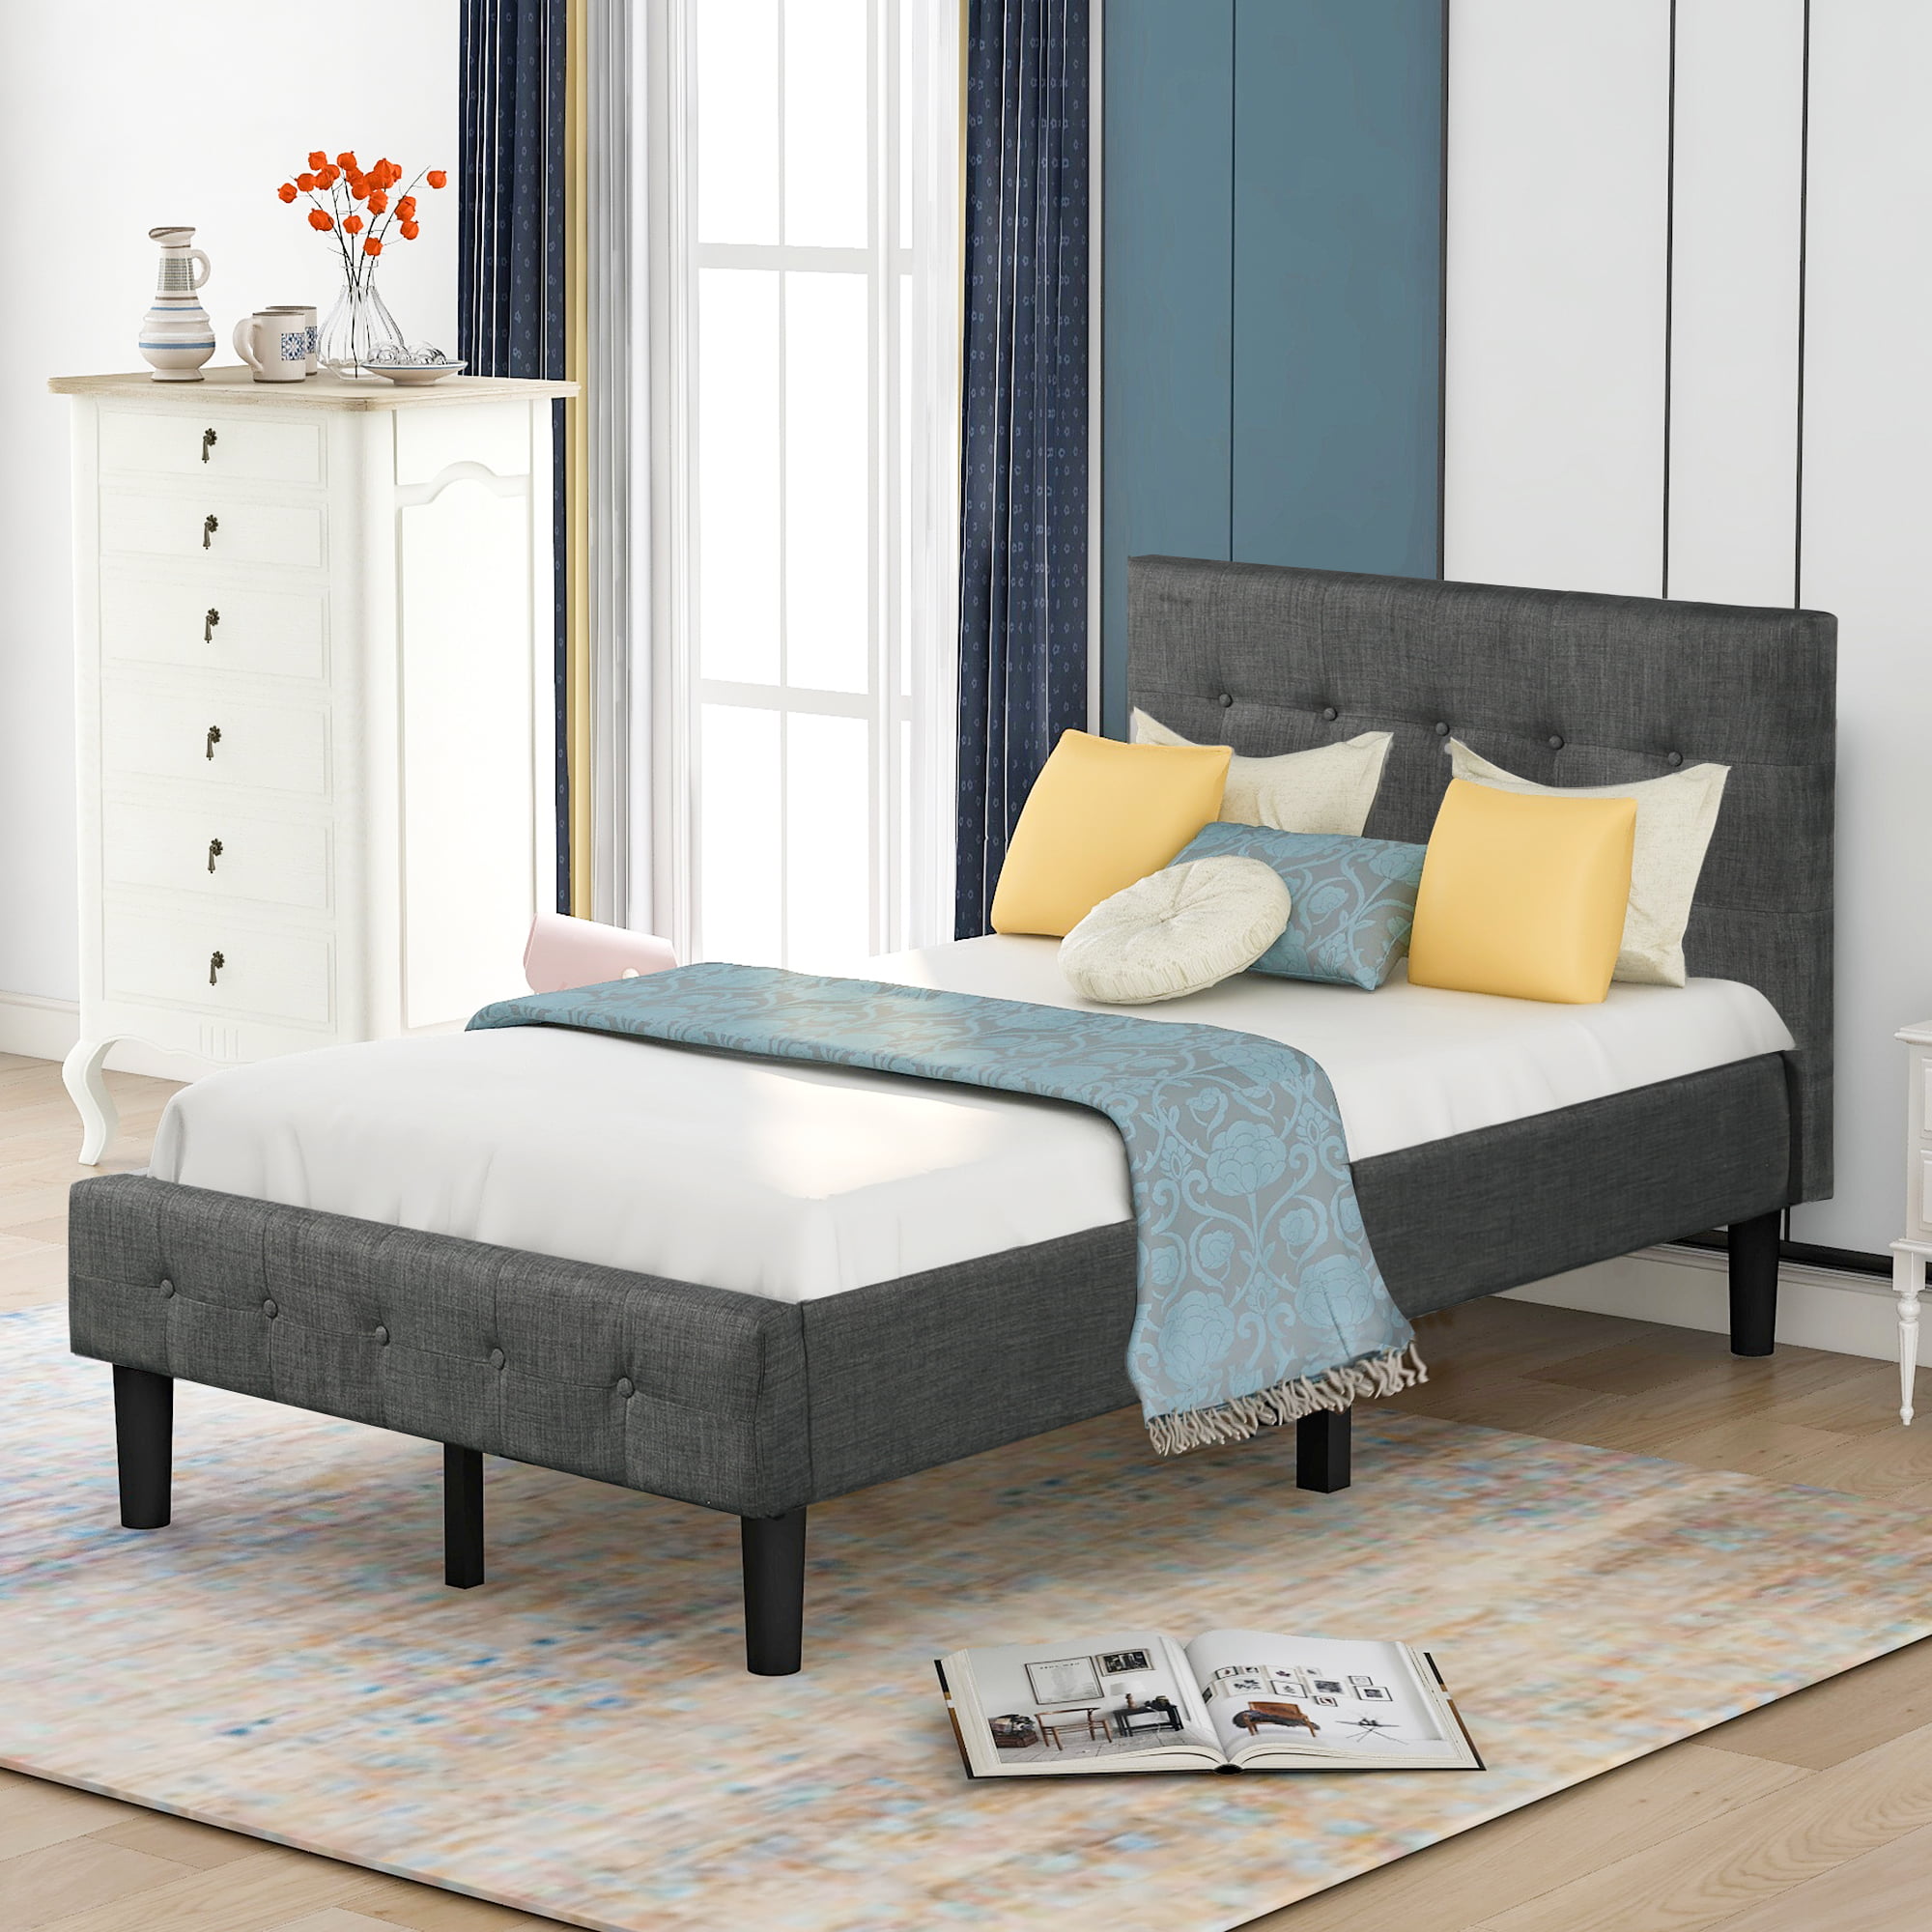 Twin Size Platform Bed Frame w/Tufted Headboard Gray Upholstered Bed Wood Frame 